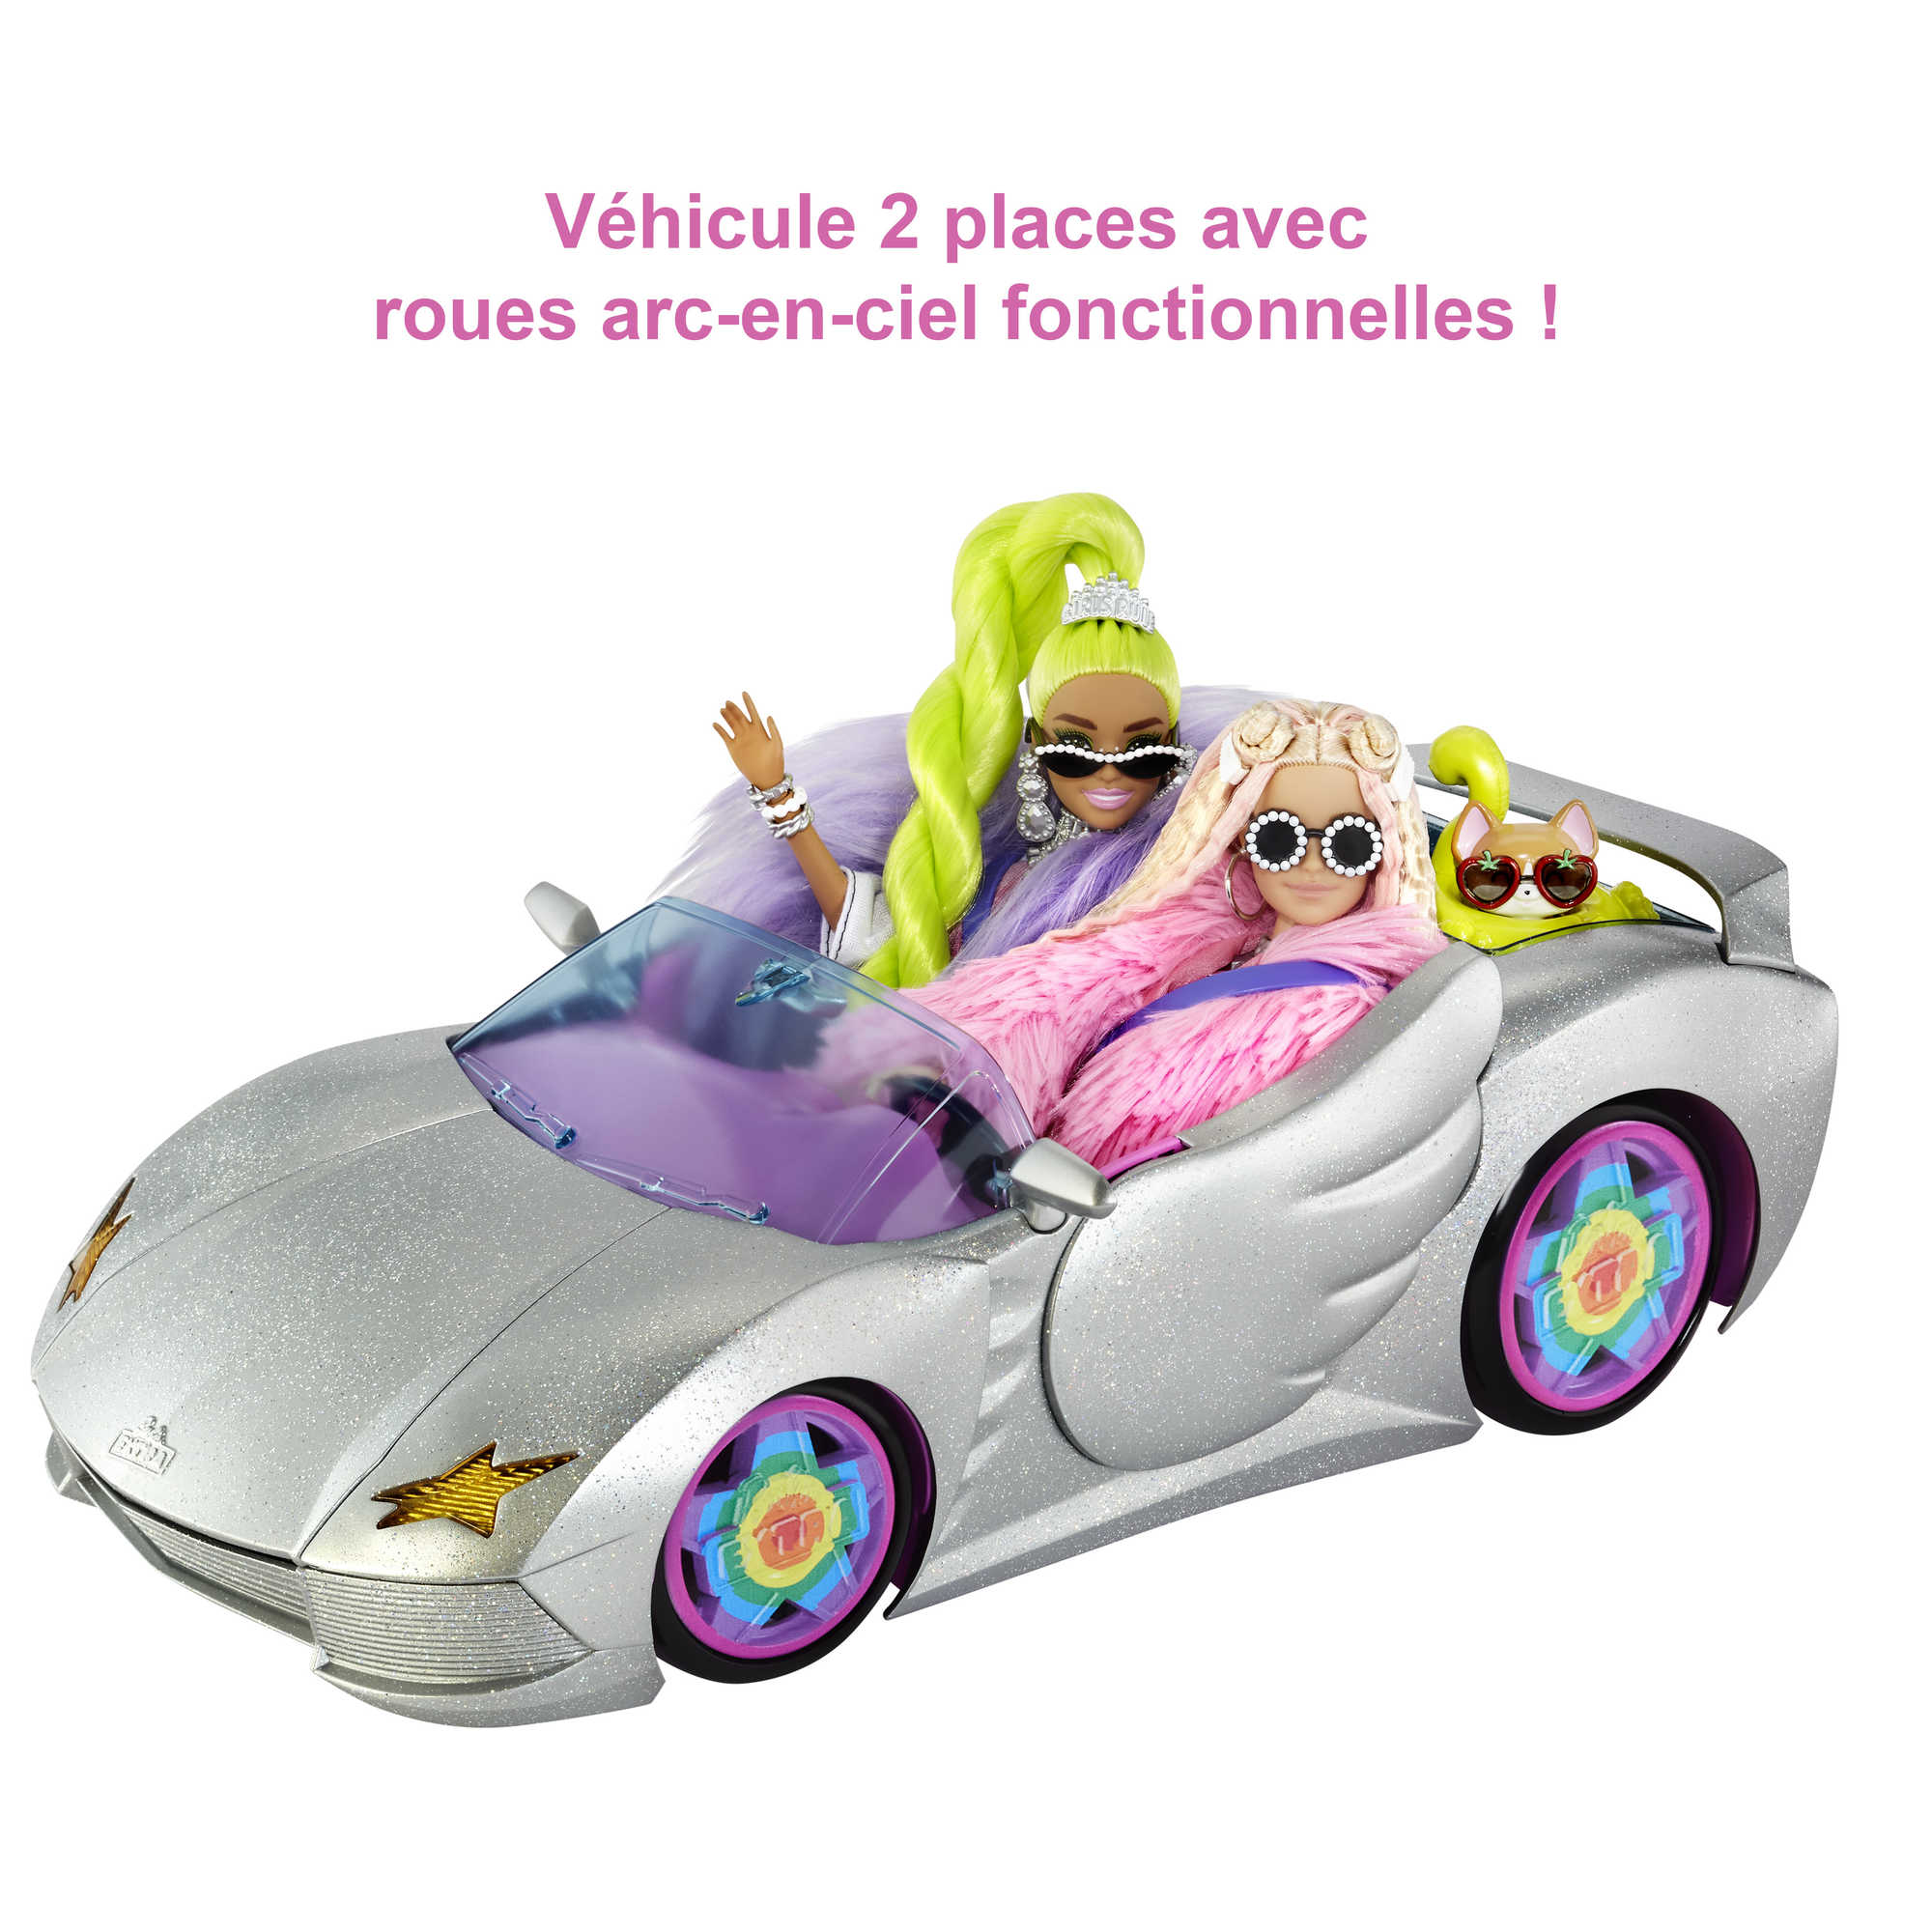 Voiture cabriolet année 2000 - Barbie